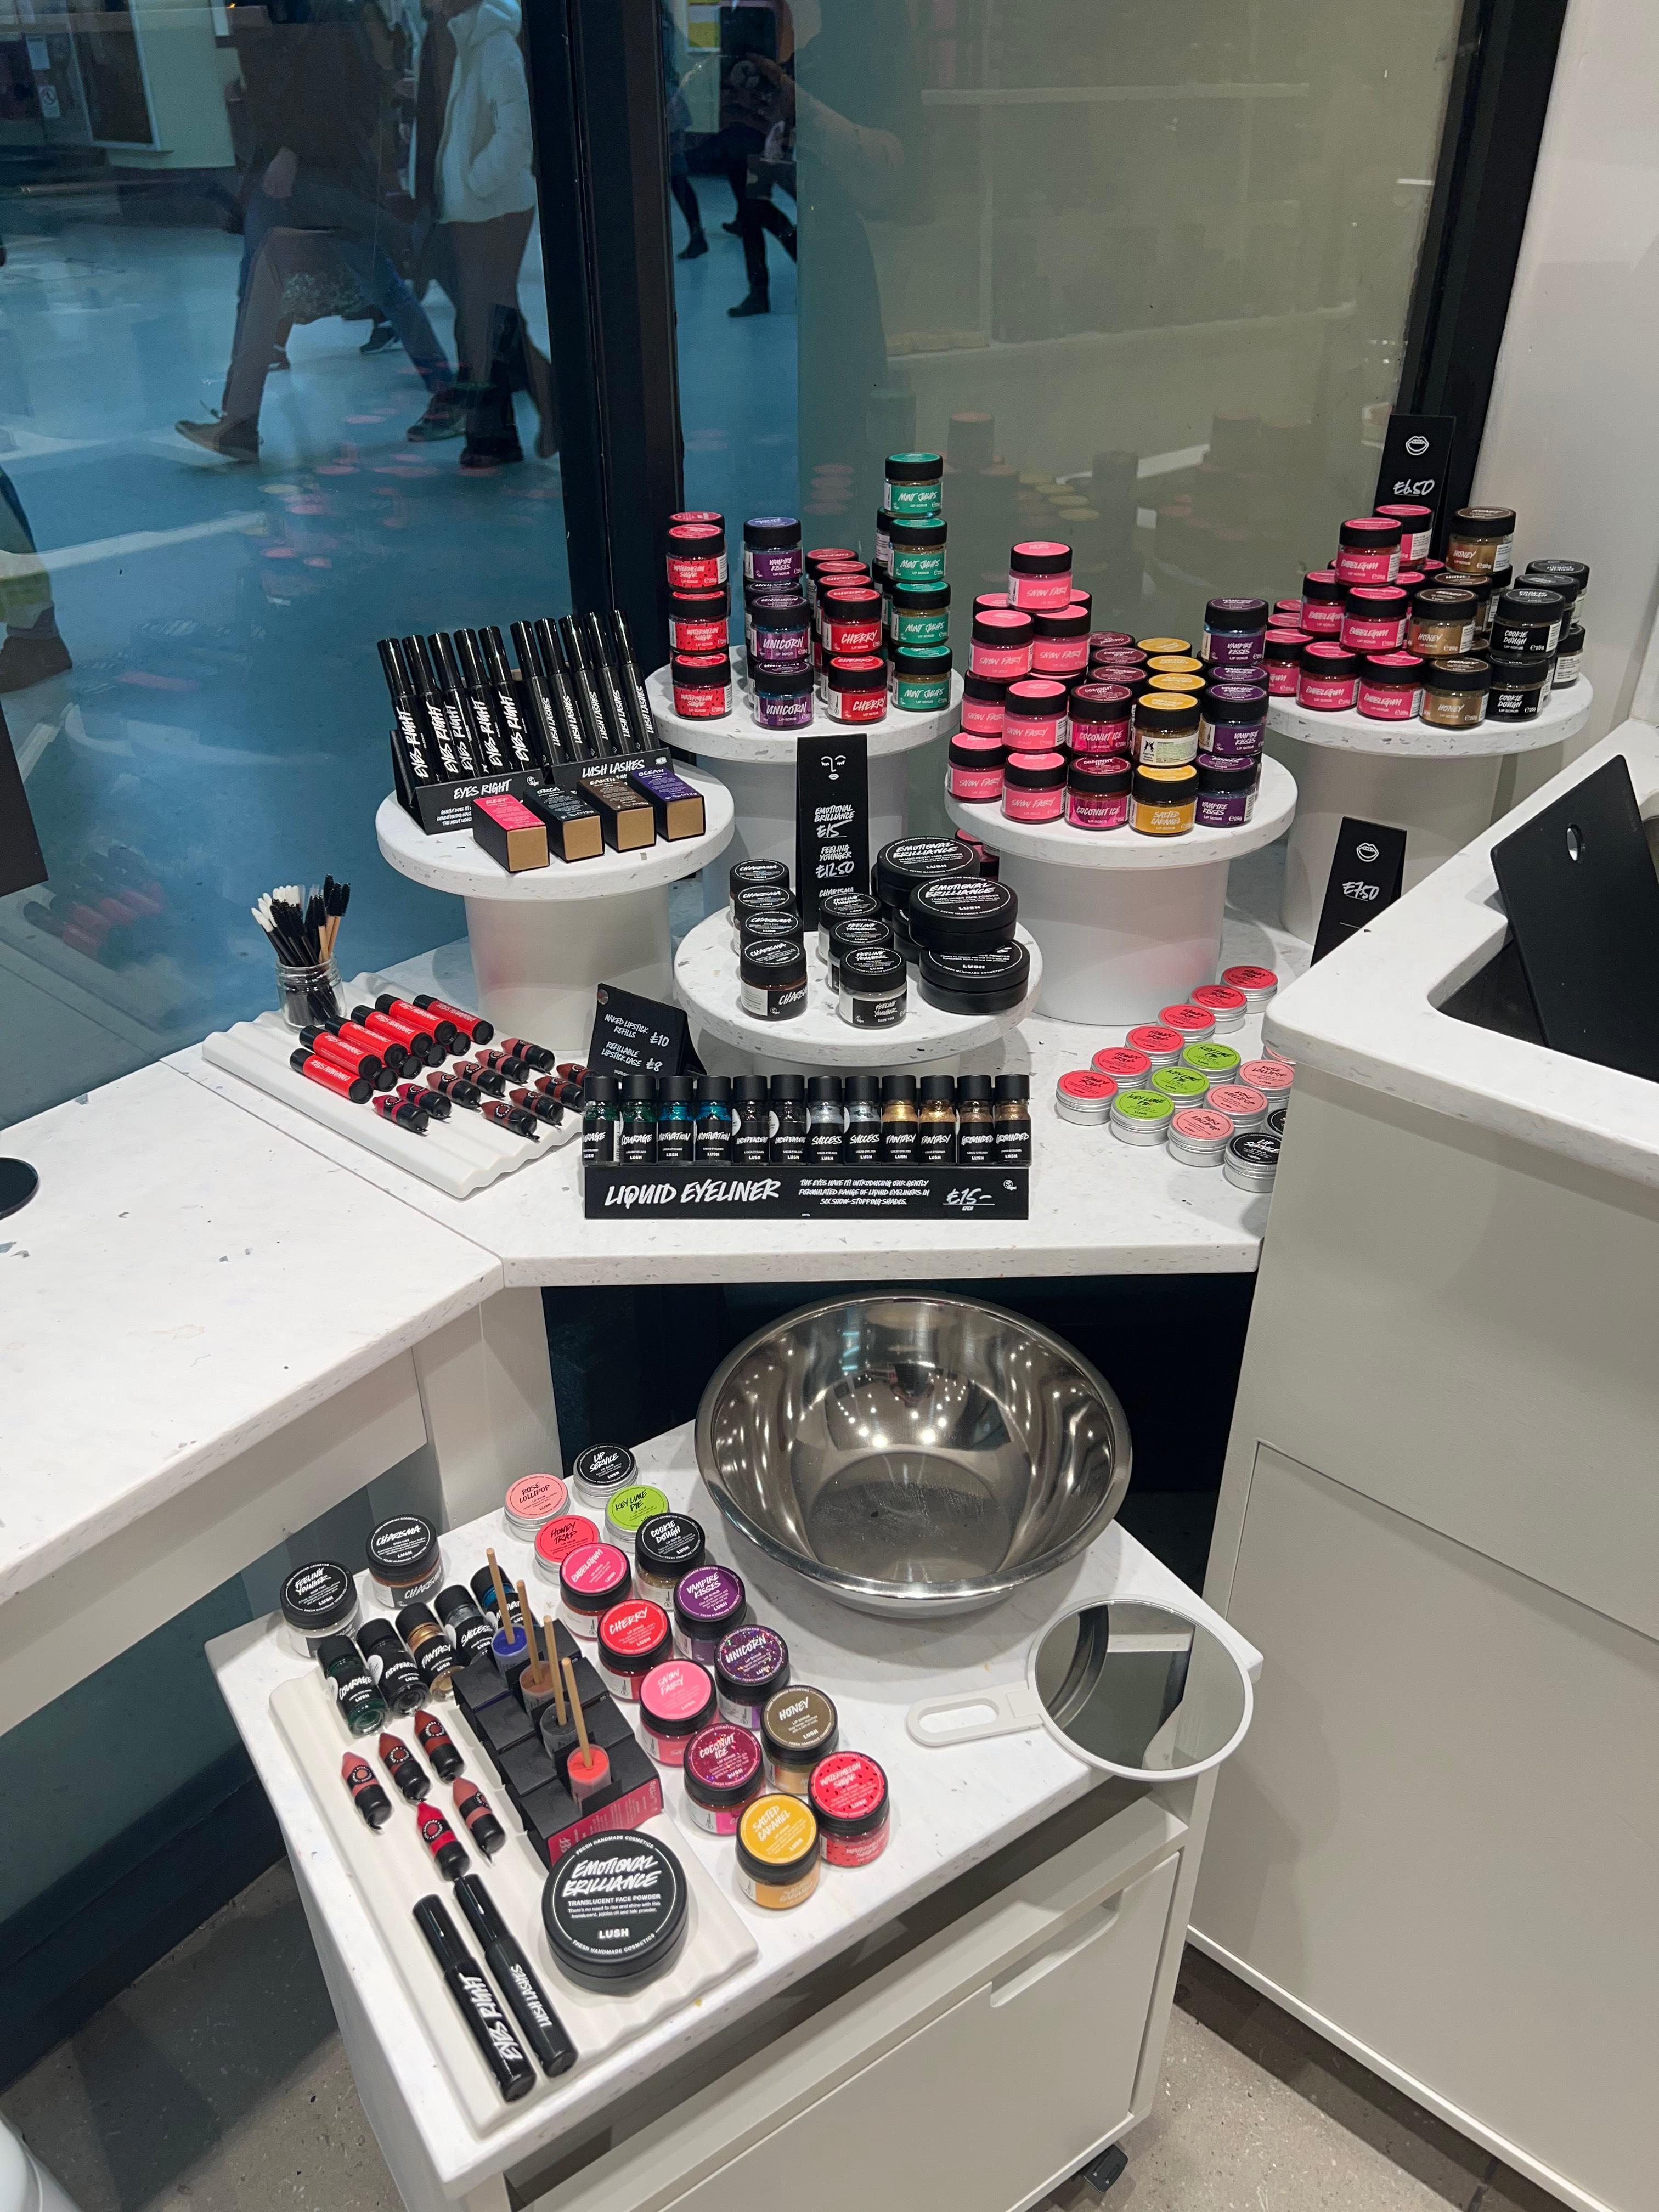 Images Lush Cosmetics Victoria Station